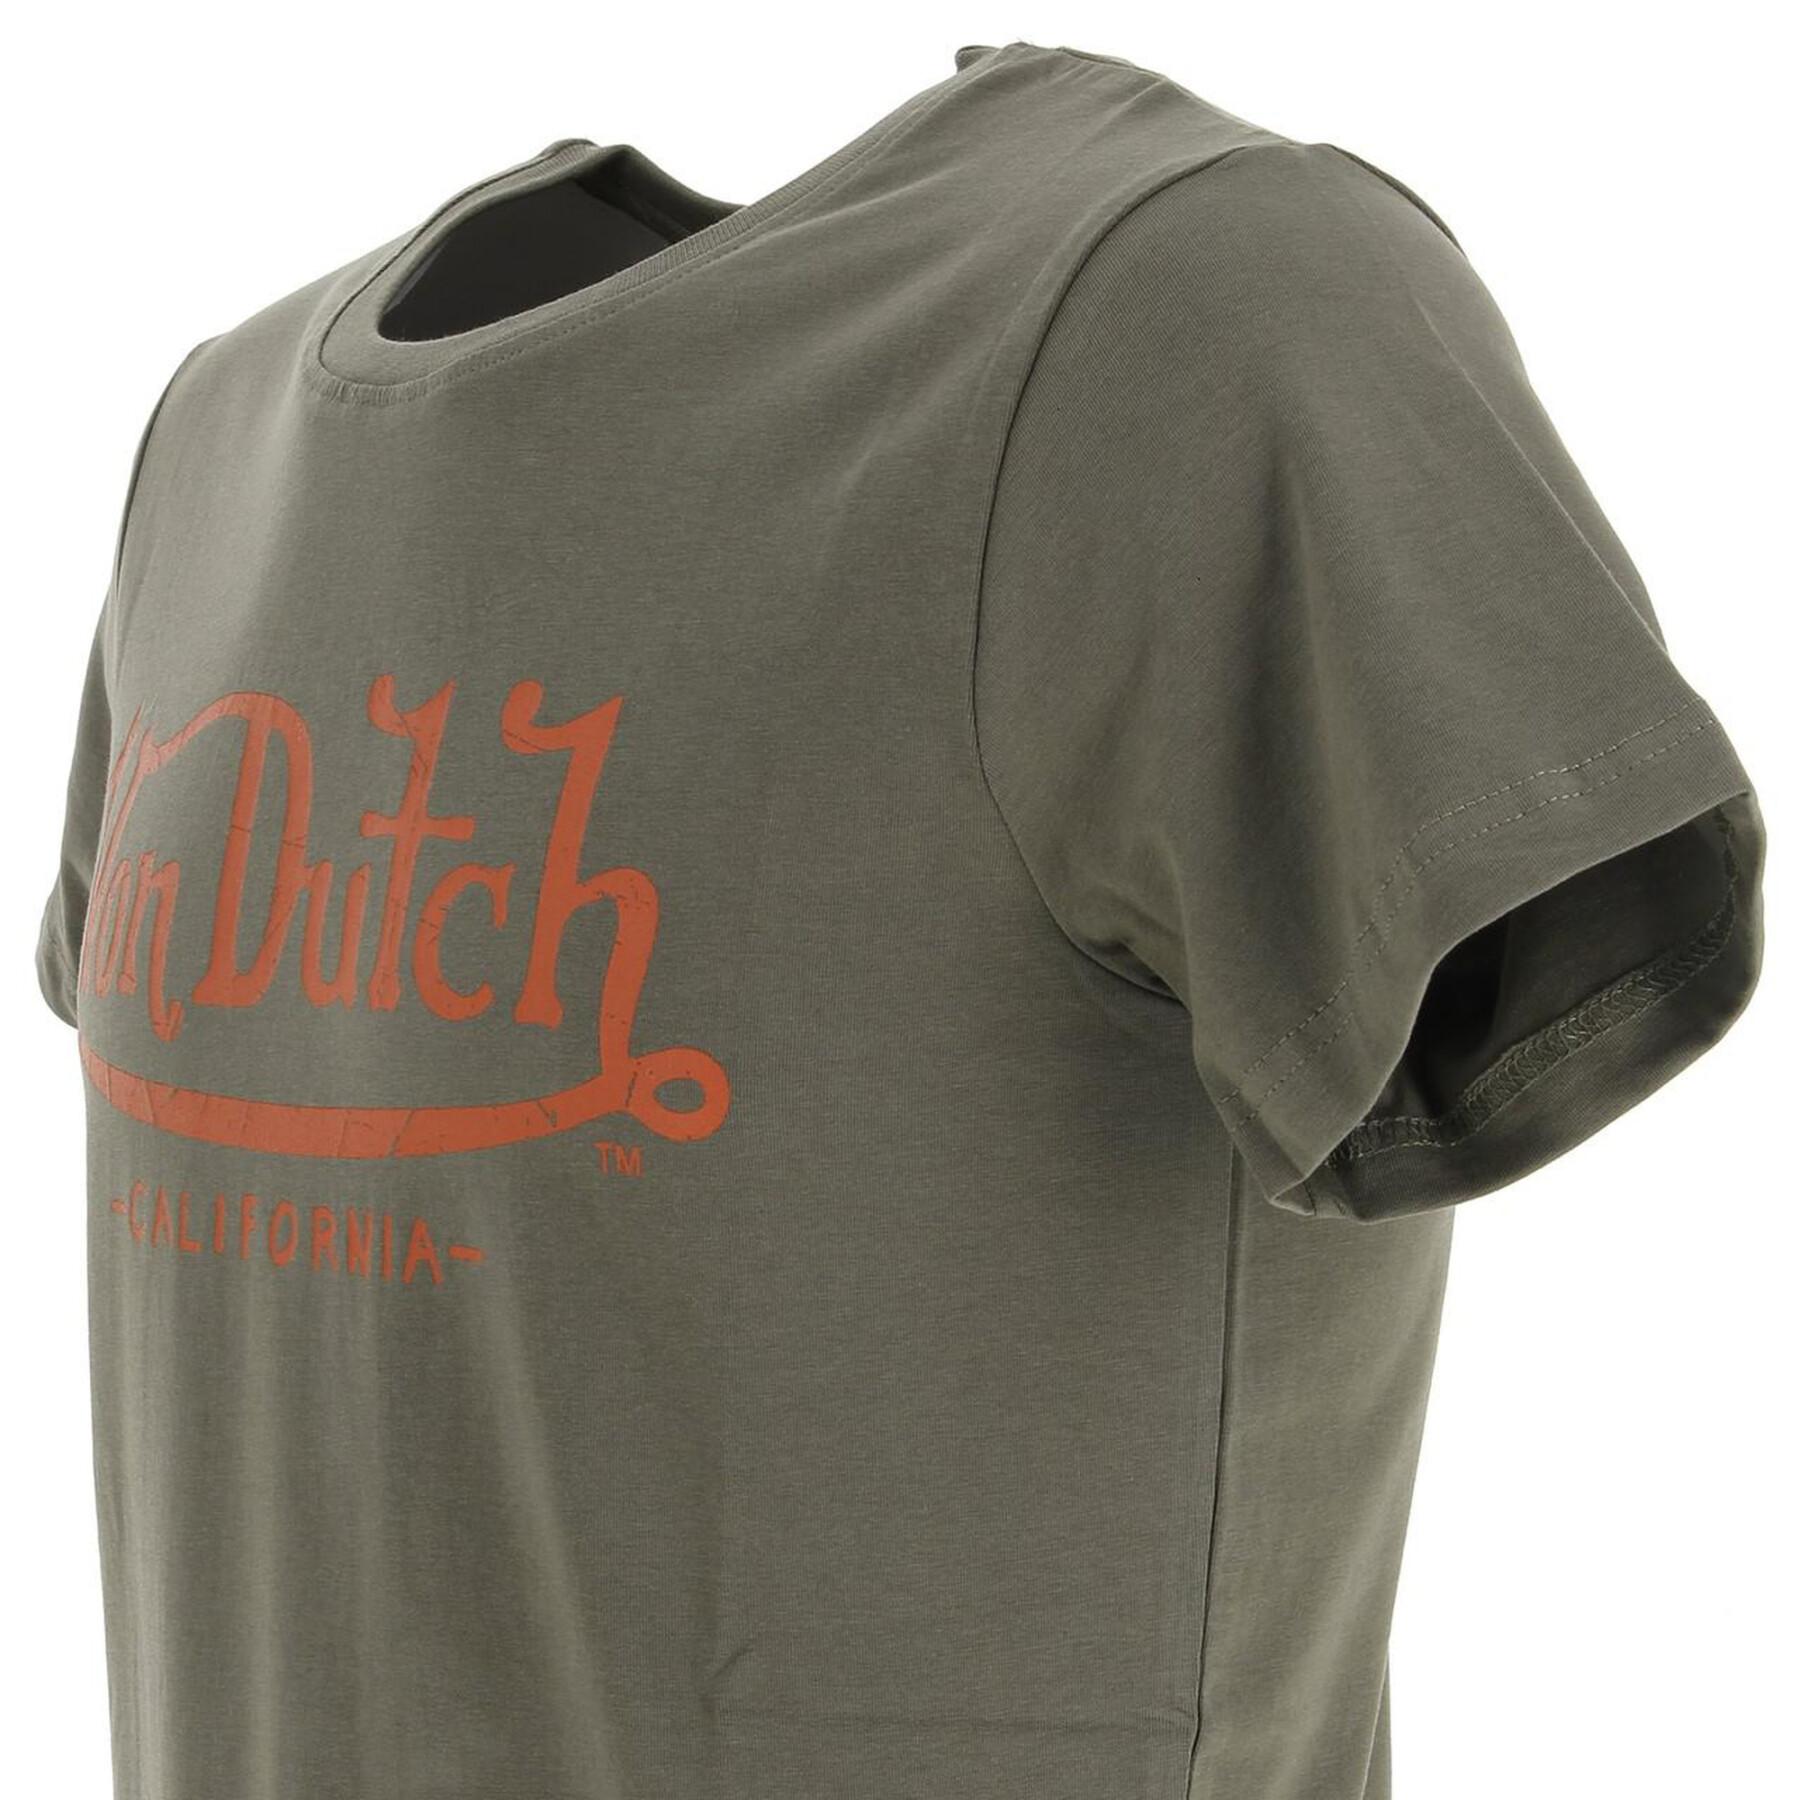 Camiseta Von Dutch Life Ko